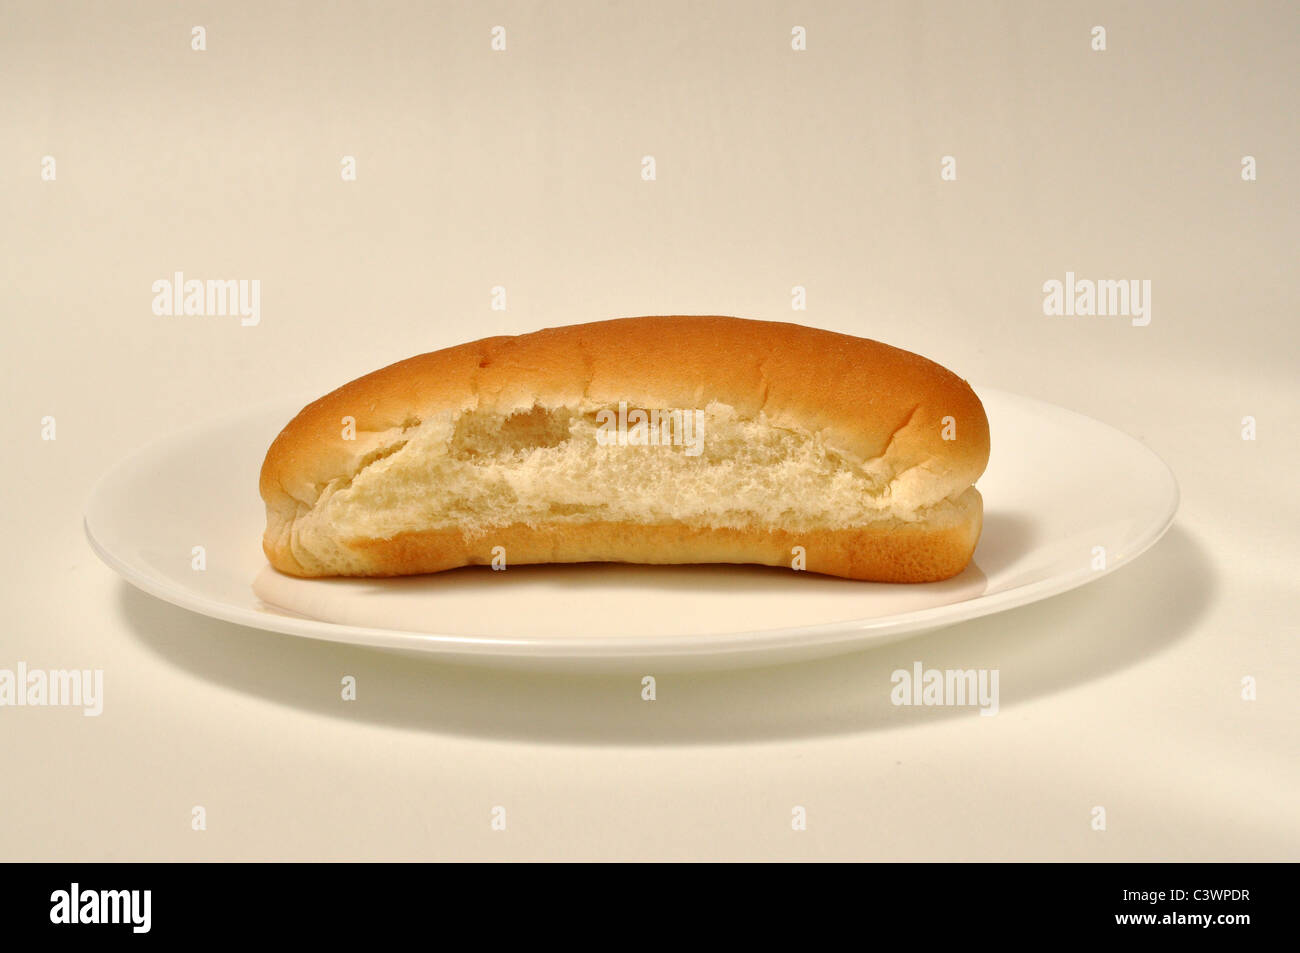 A hot dog bun lays on a plate. Stock Photo